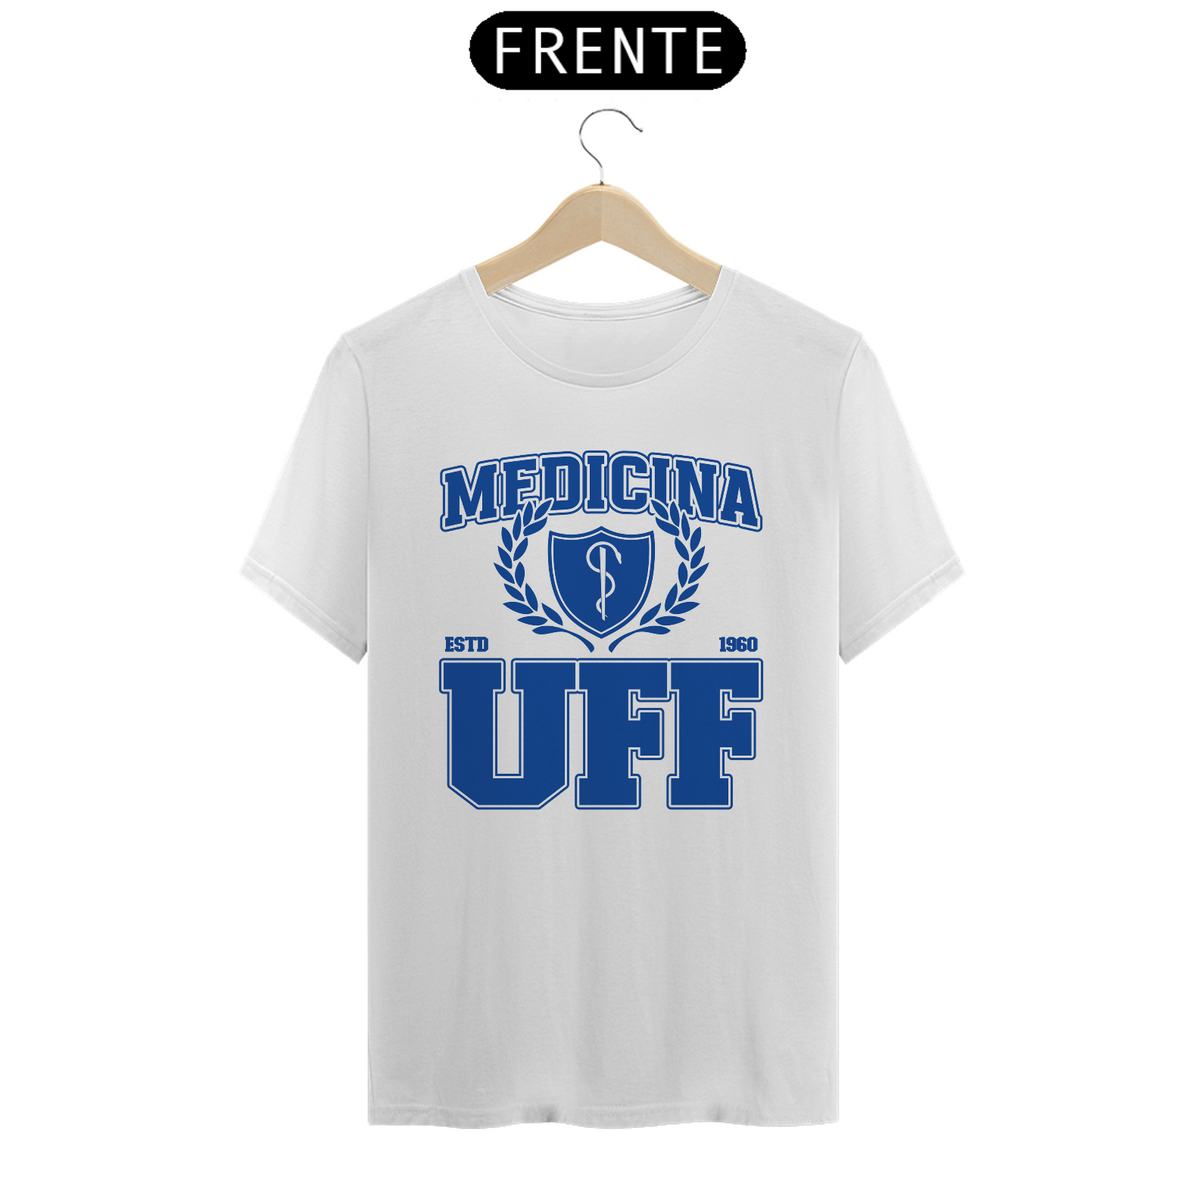 Nome do produto: UniVerso-Medicina UFF